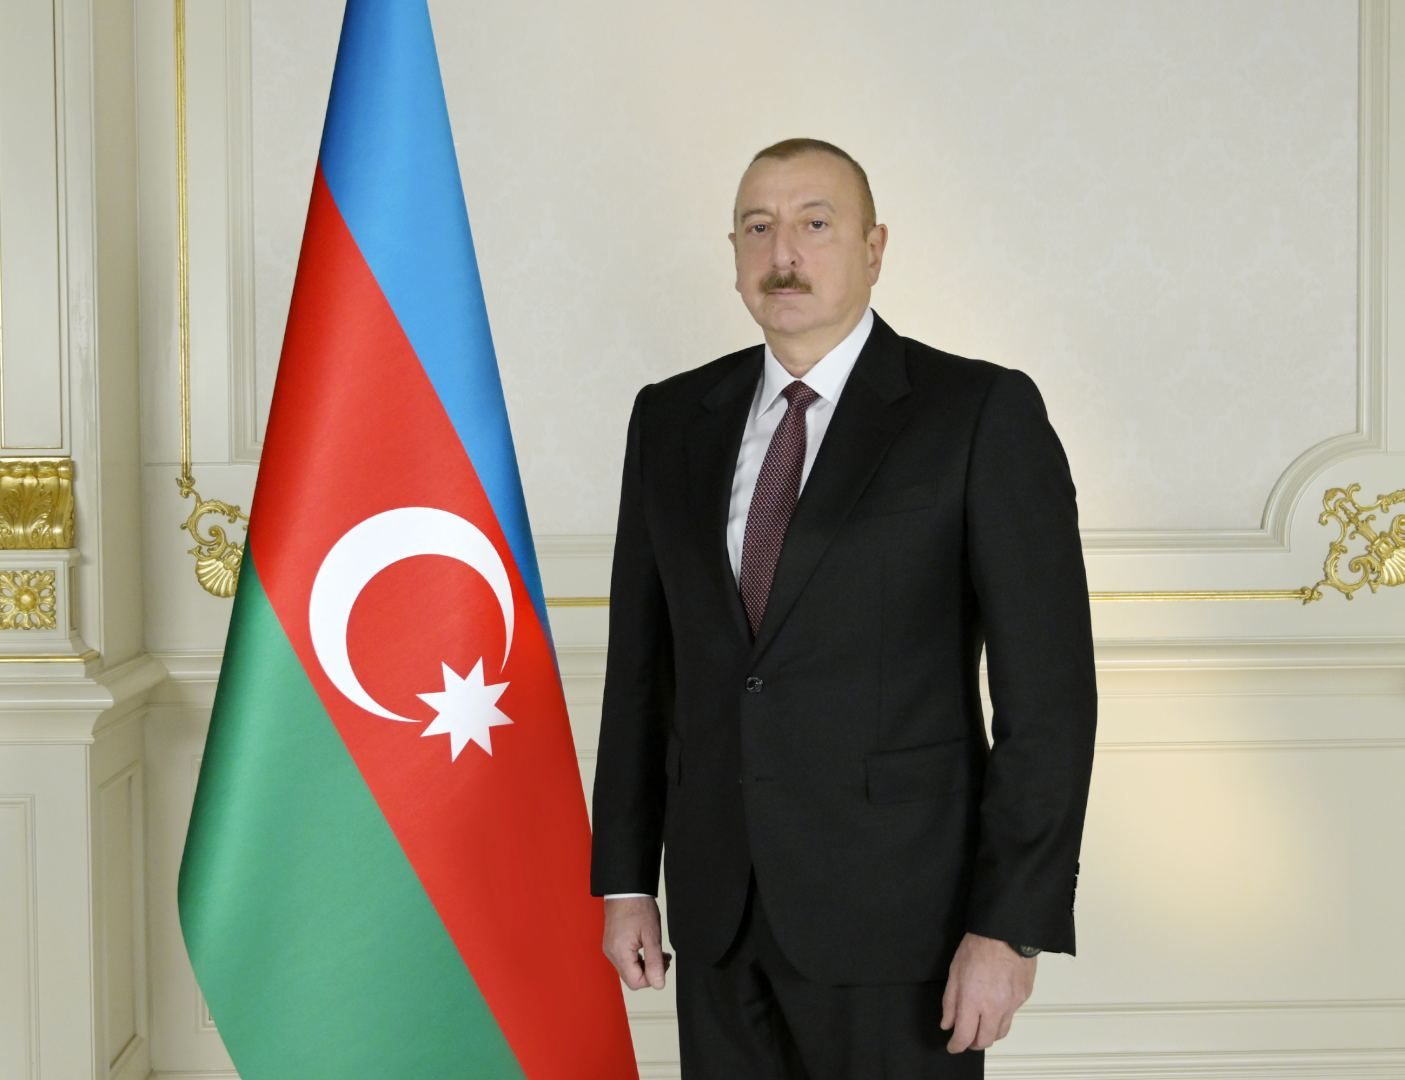 Azerbaijani President makes post on Remembrance Day [PHOTO]